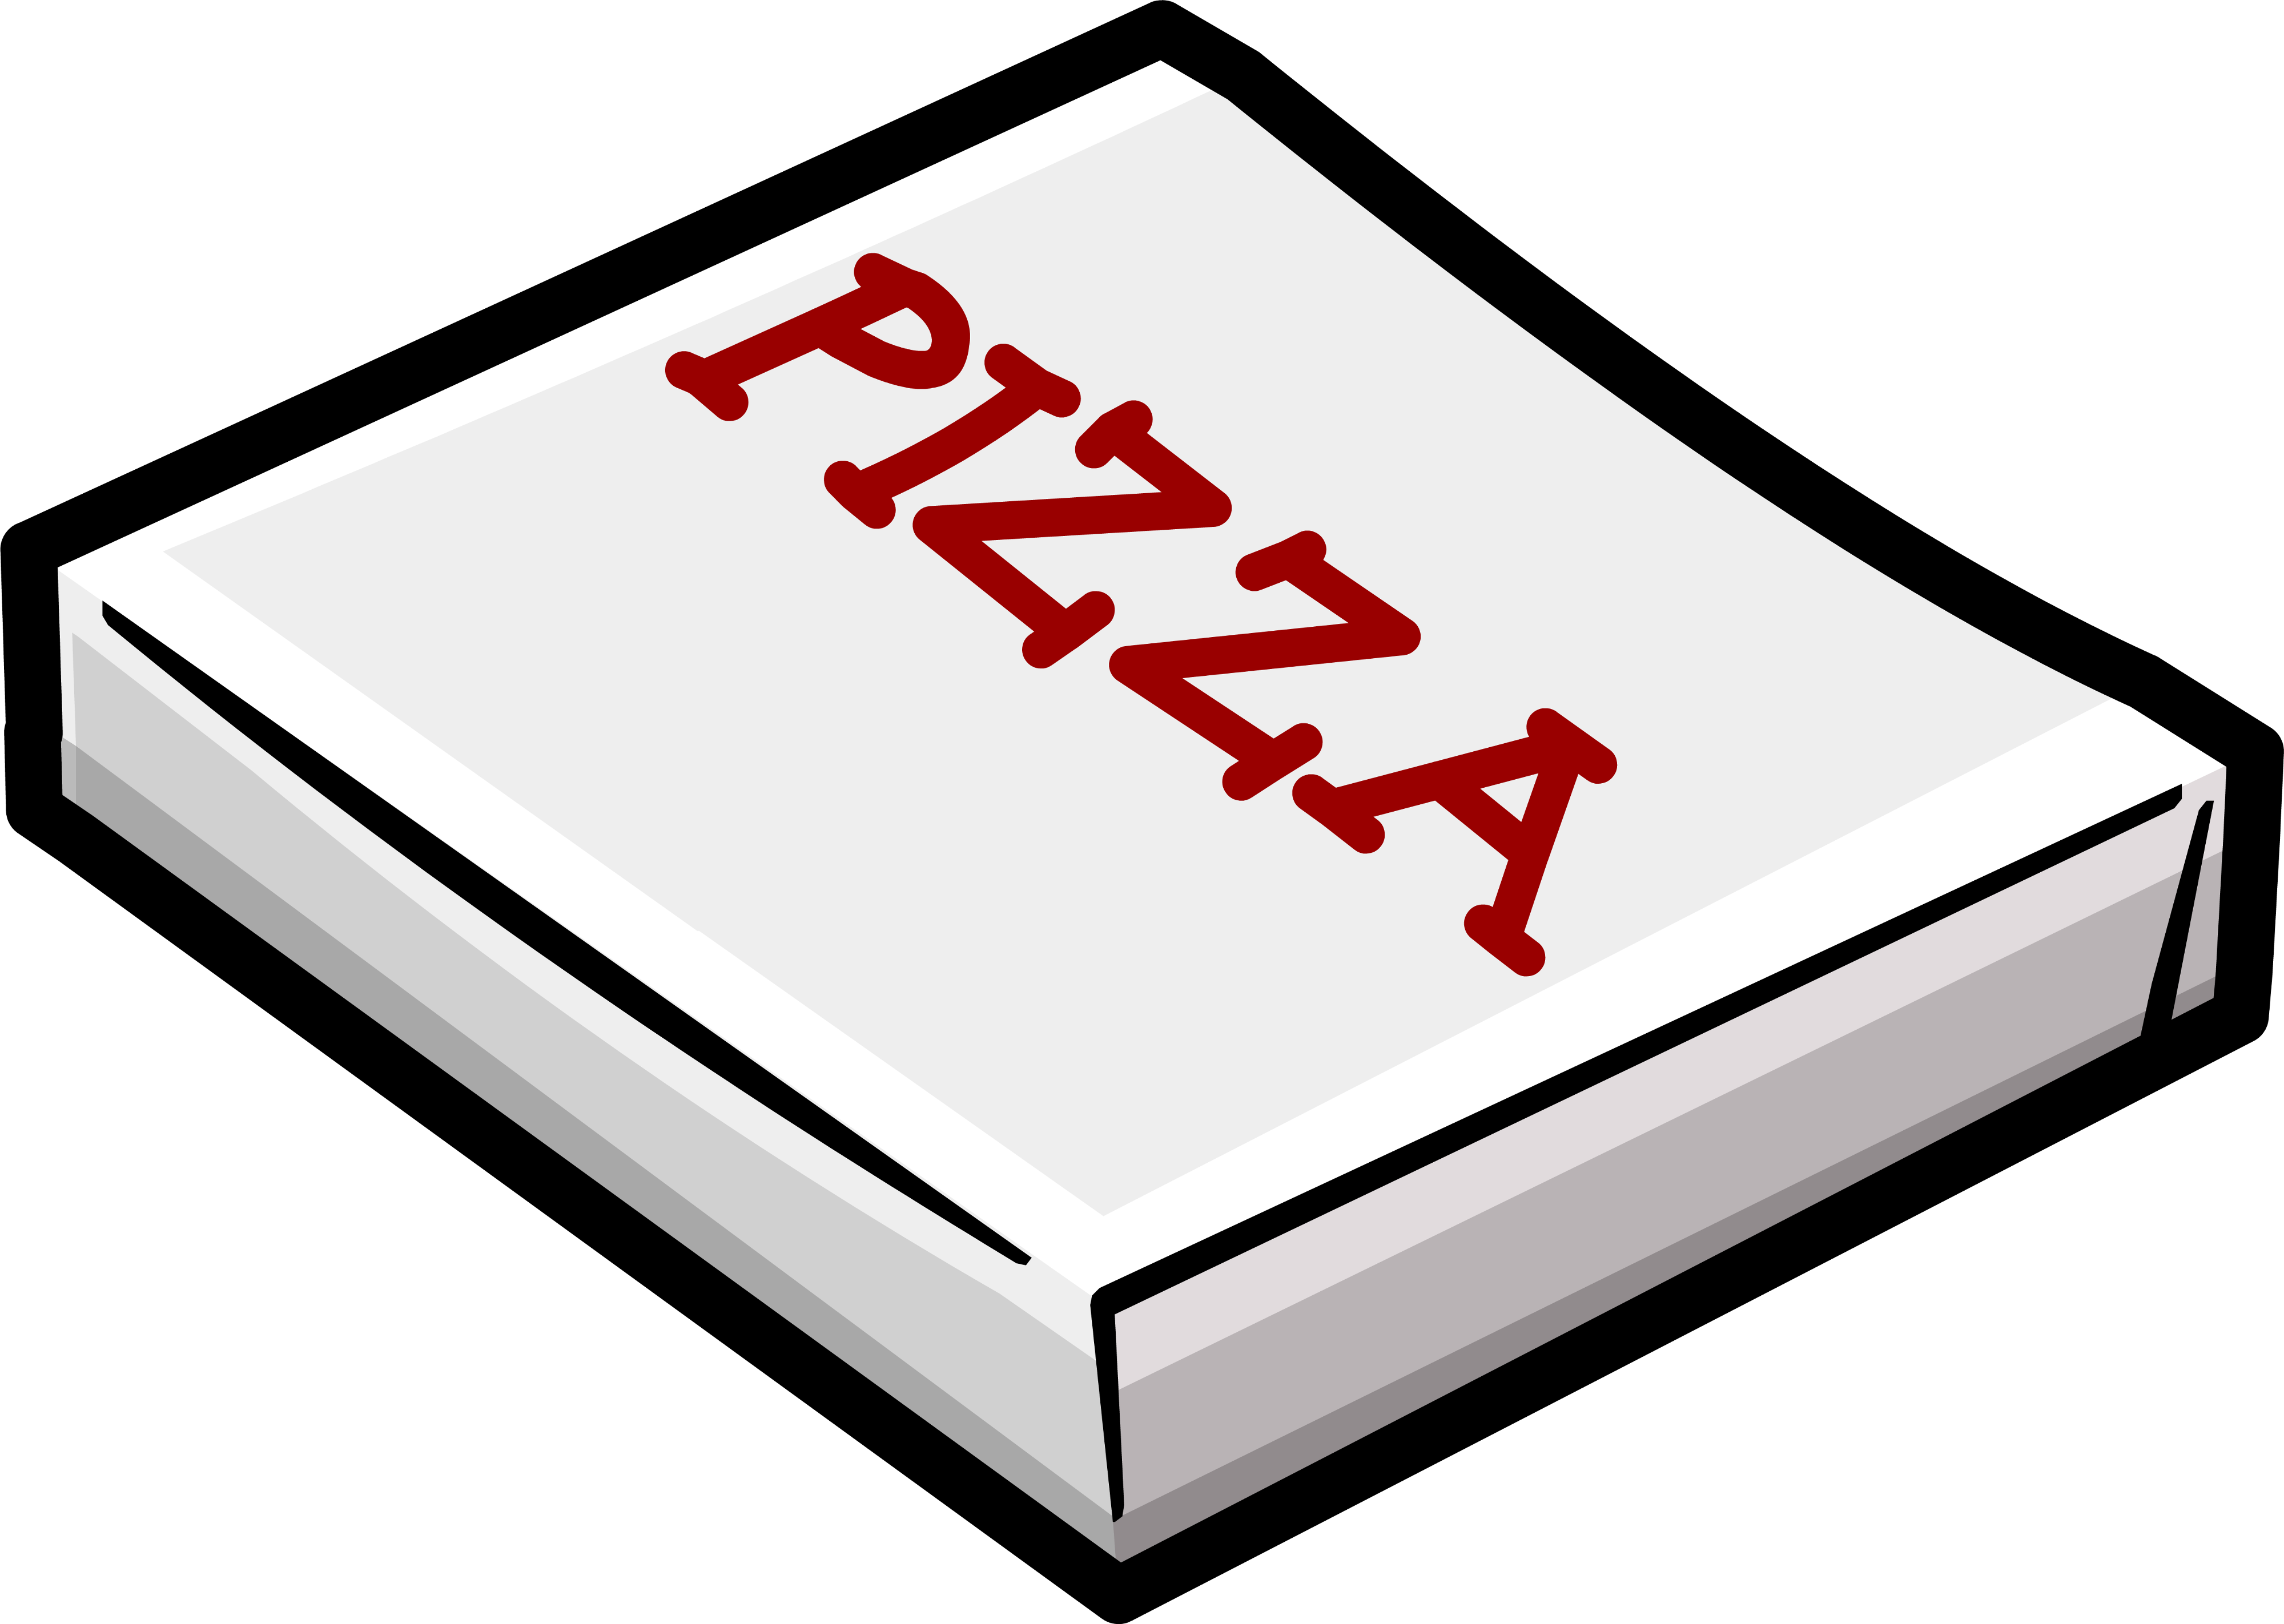 Box Of Pizza  Award    Club Penguin Wiki   The Free Editable    